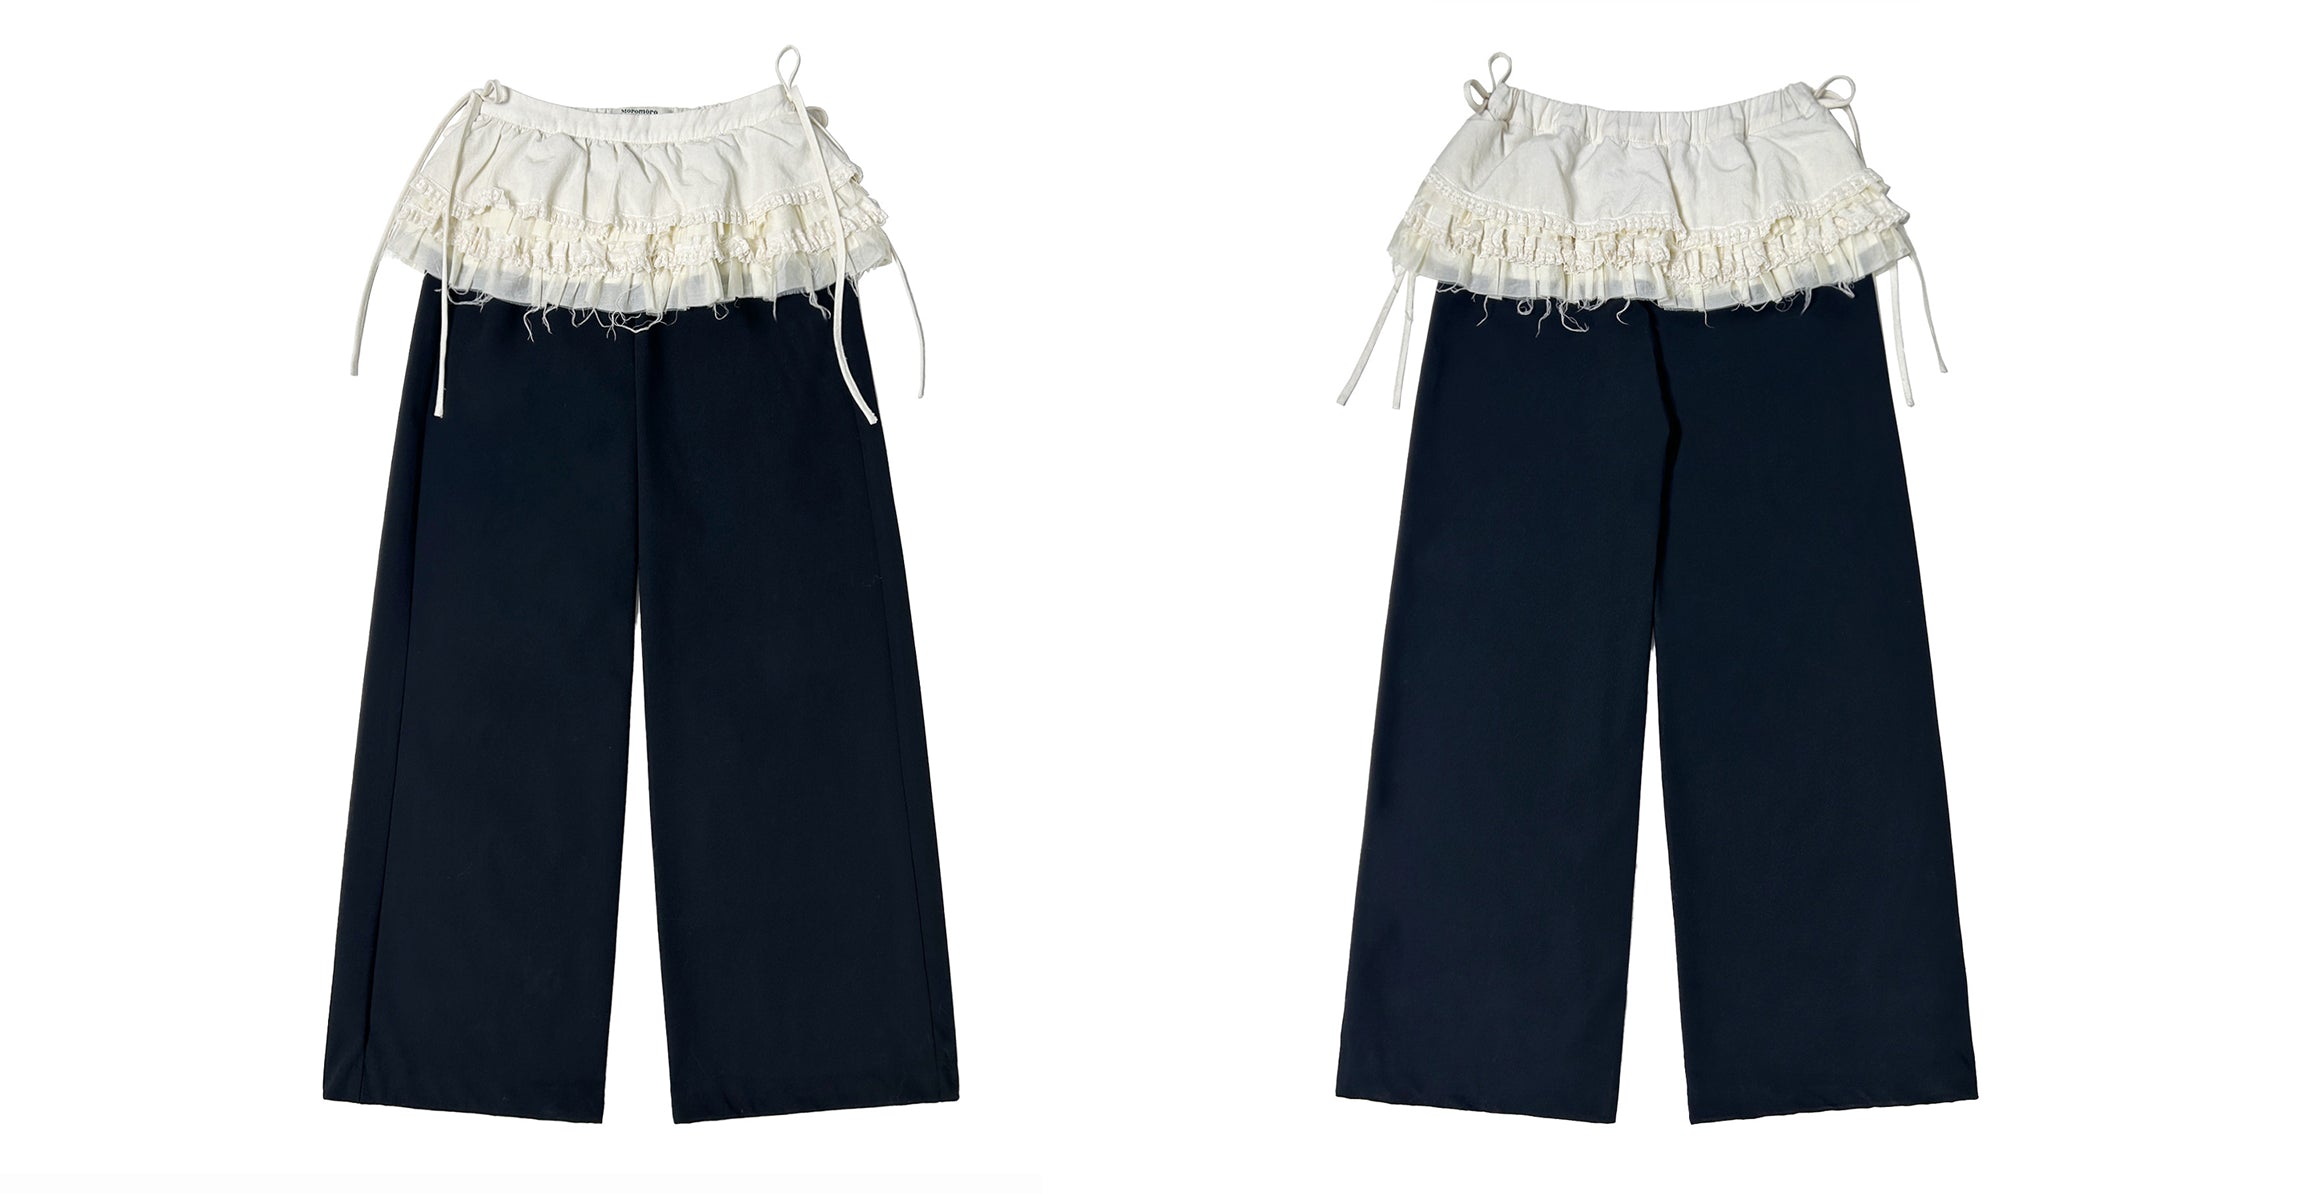 Adjustable Hem Lace Layered Cake Skirt Trousers - chiclara